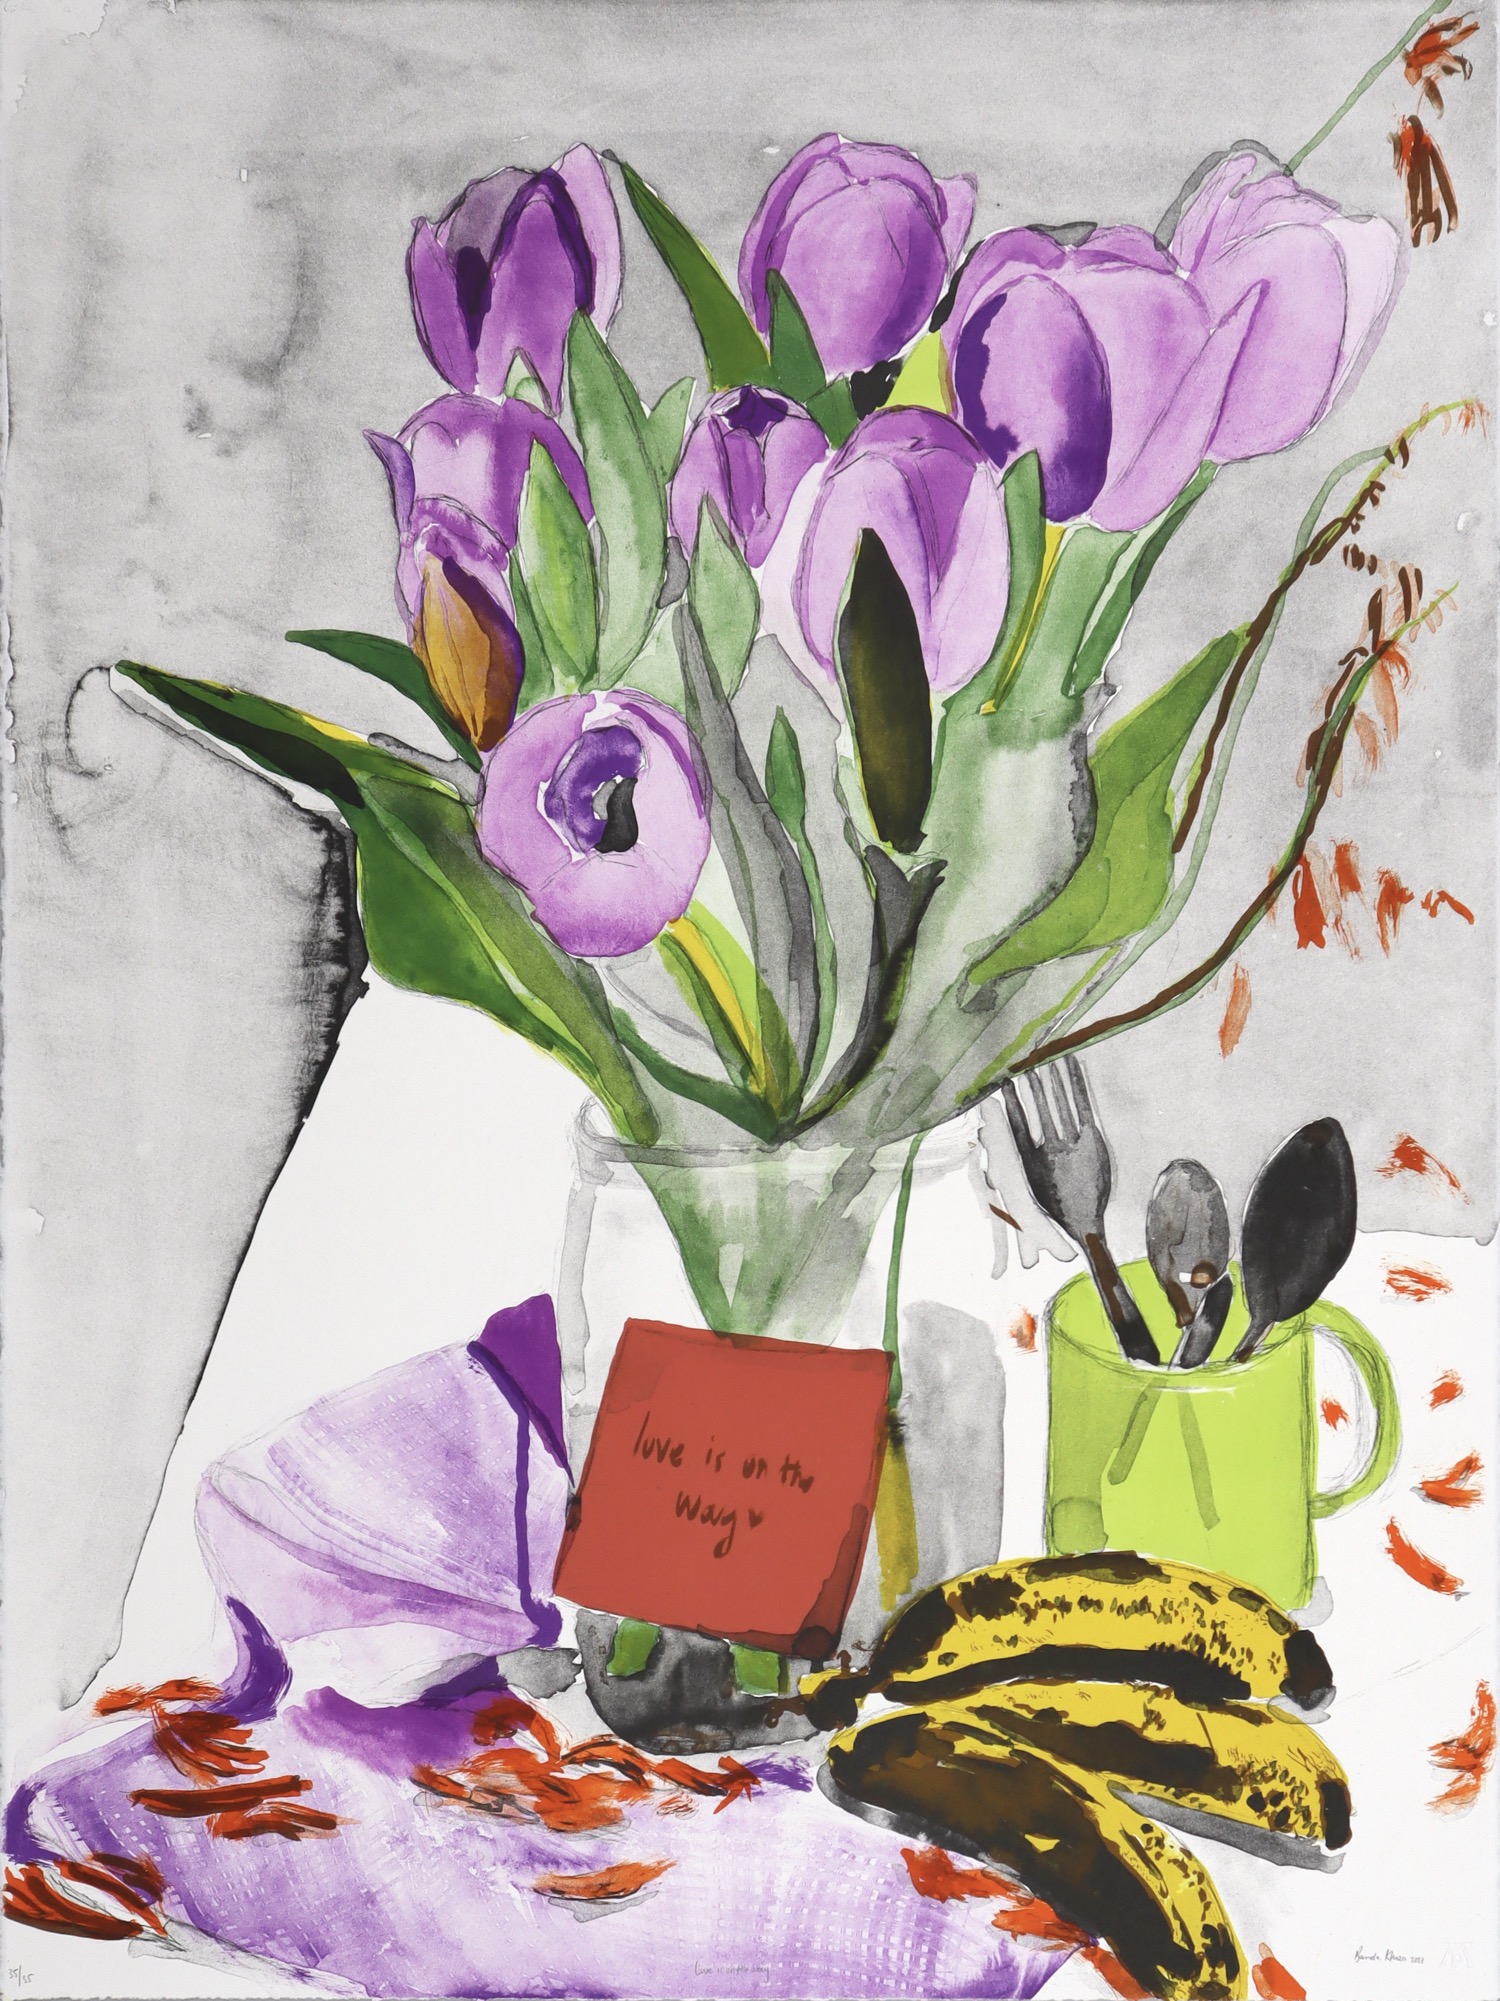 Banele Khoza colour still life with tulips lithograph